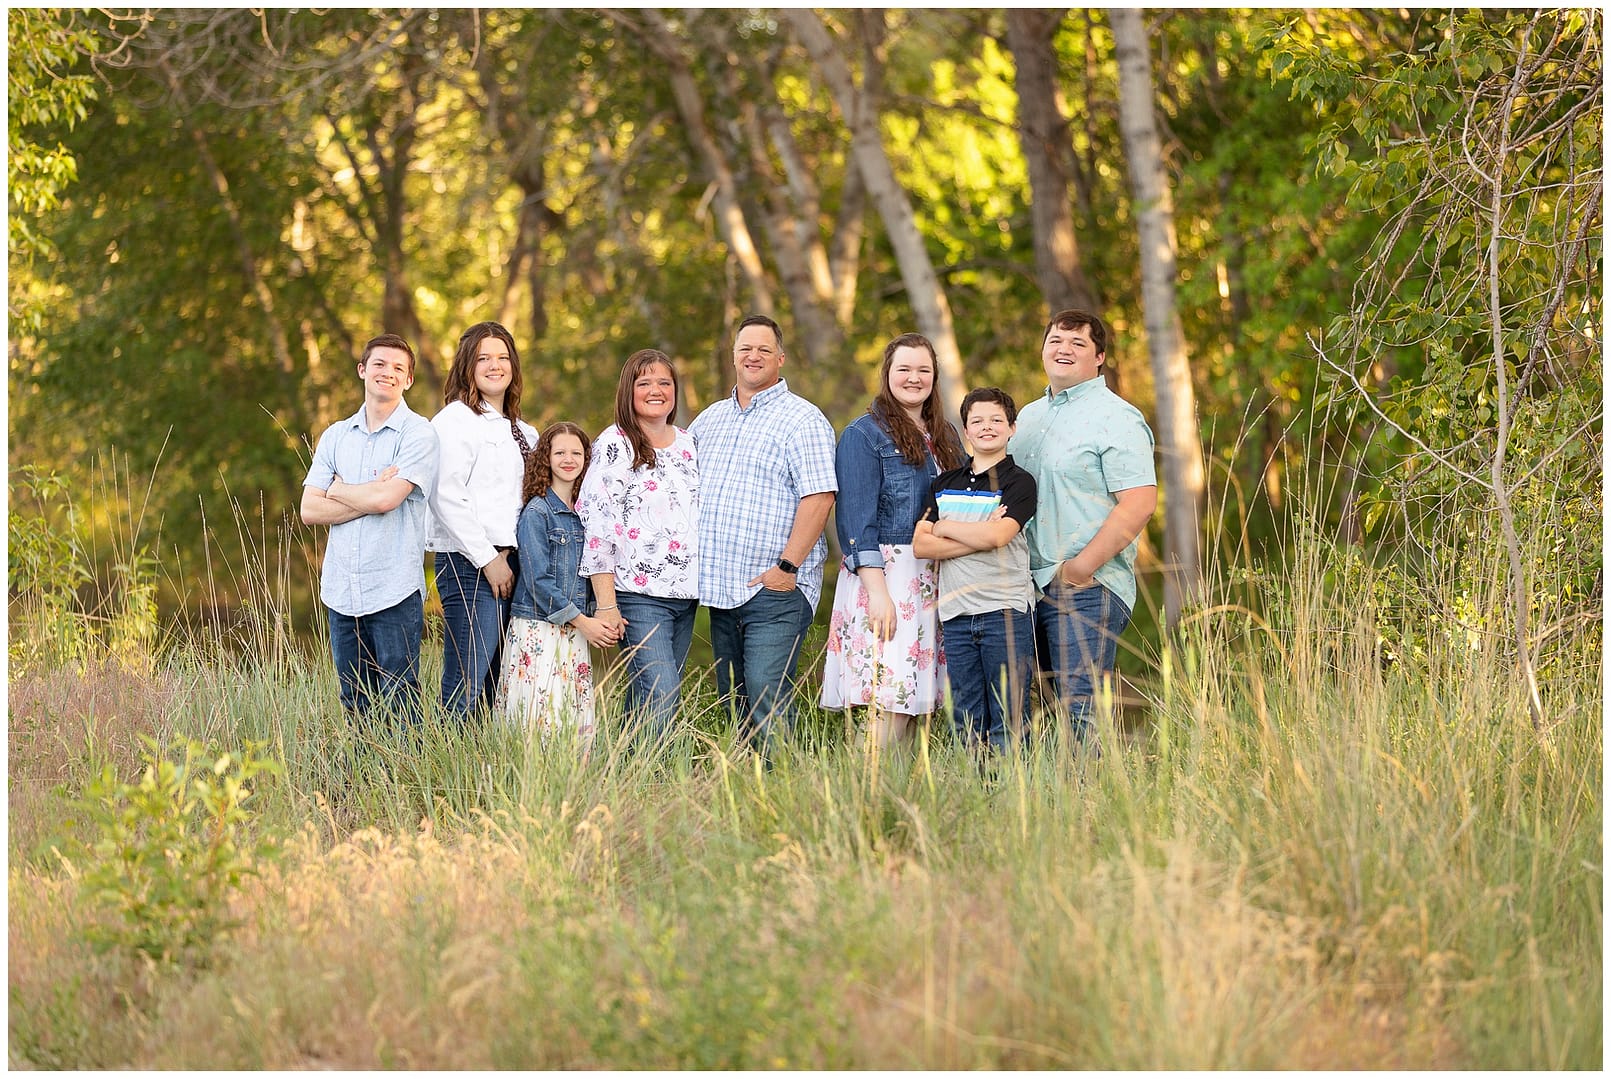 Family photos at the Boise River. Photo by Tiffany Hix Photography.